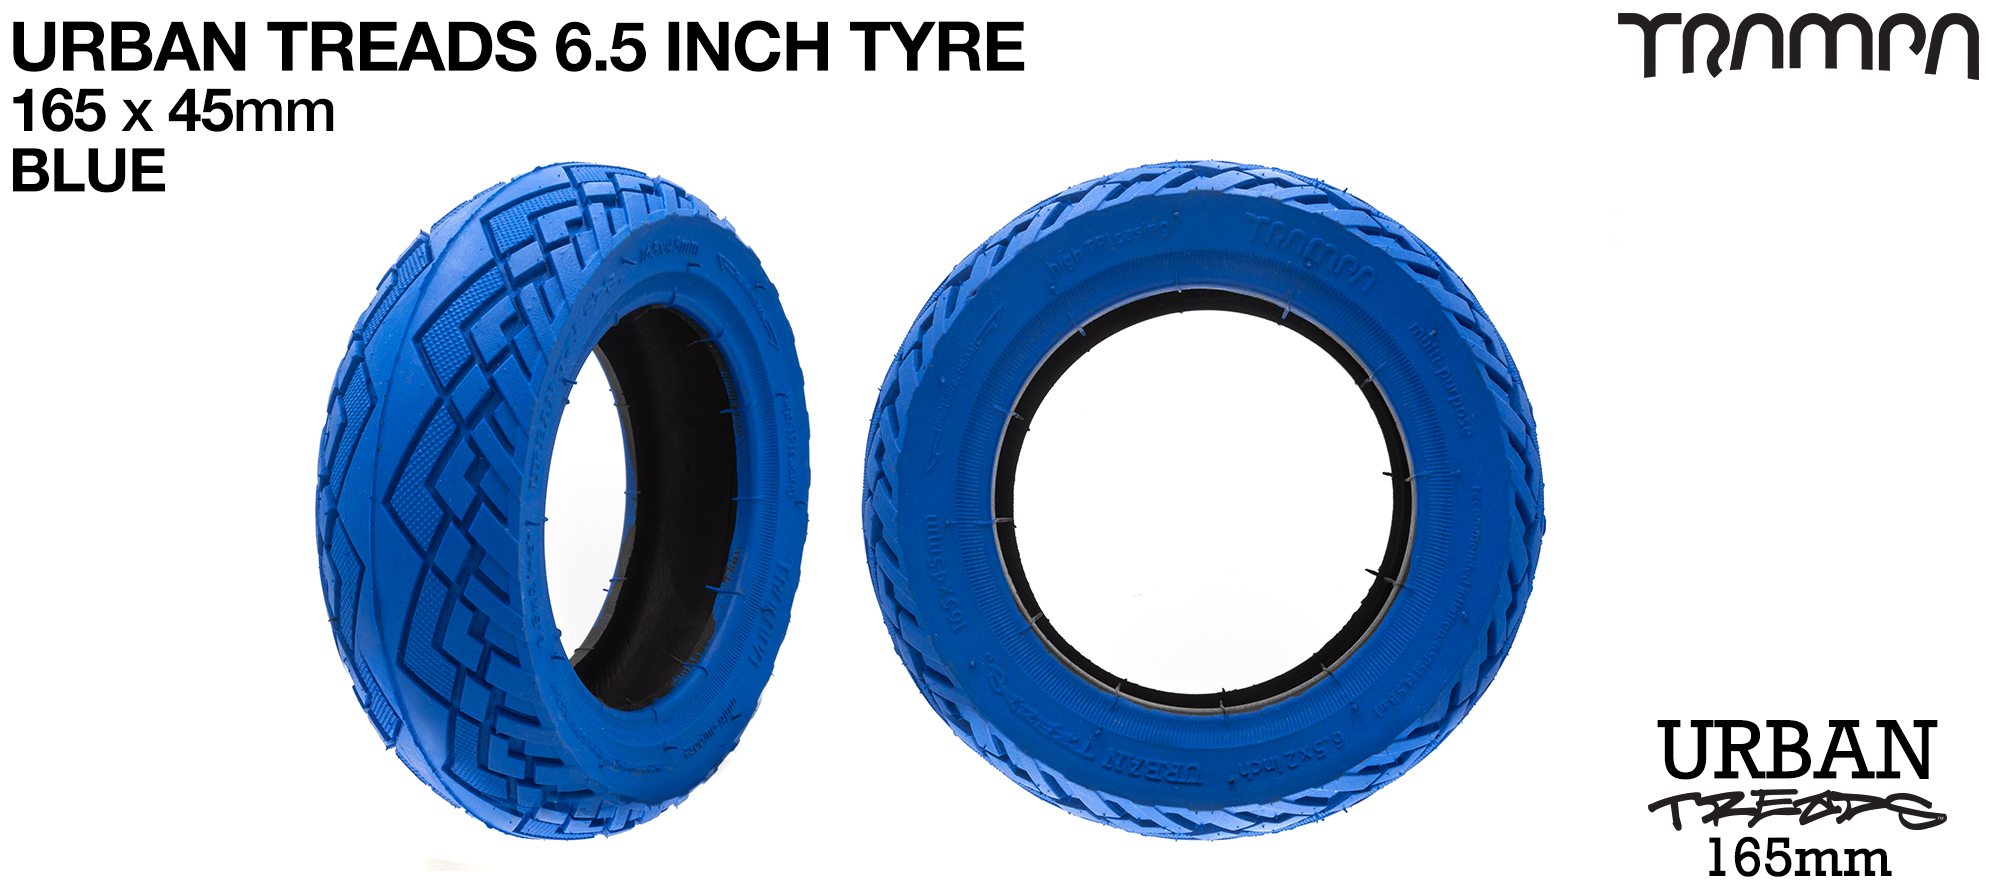 URBAN Treads Tyre - BLUE x4 